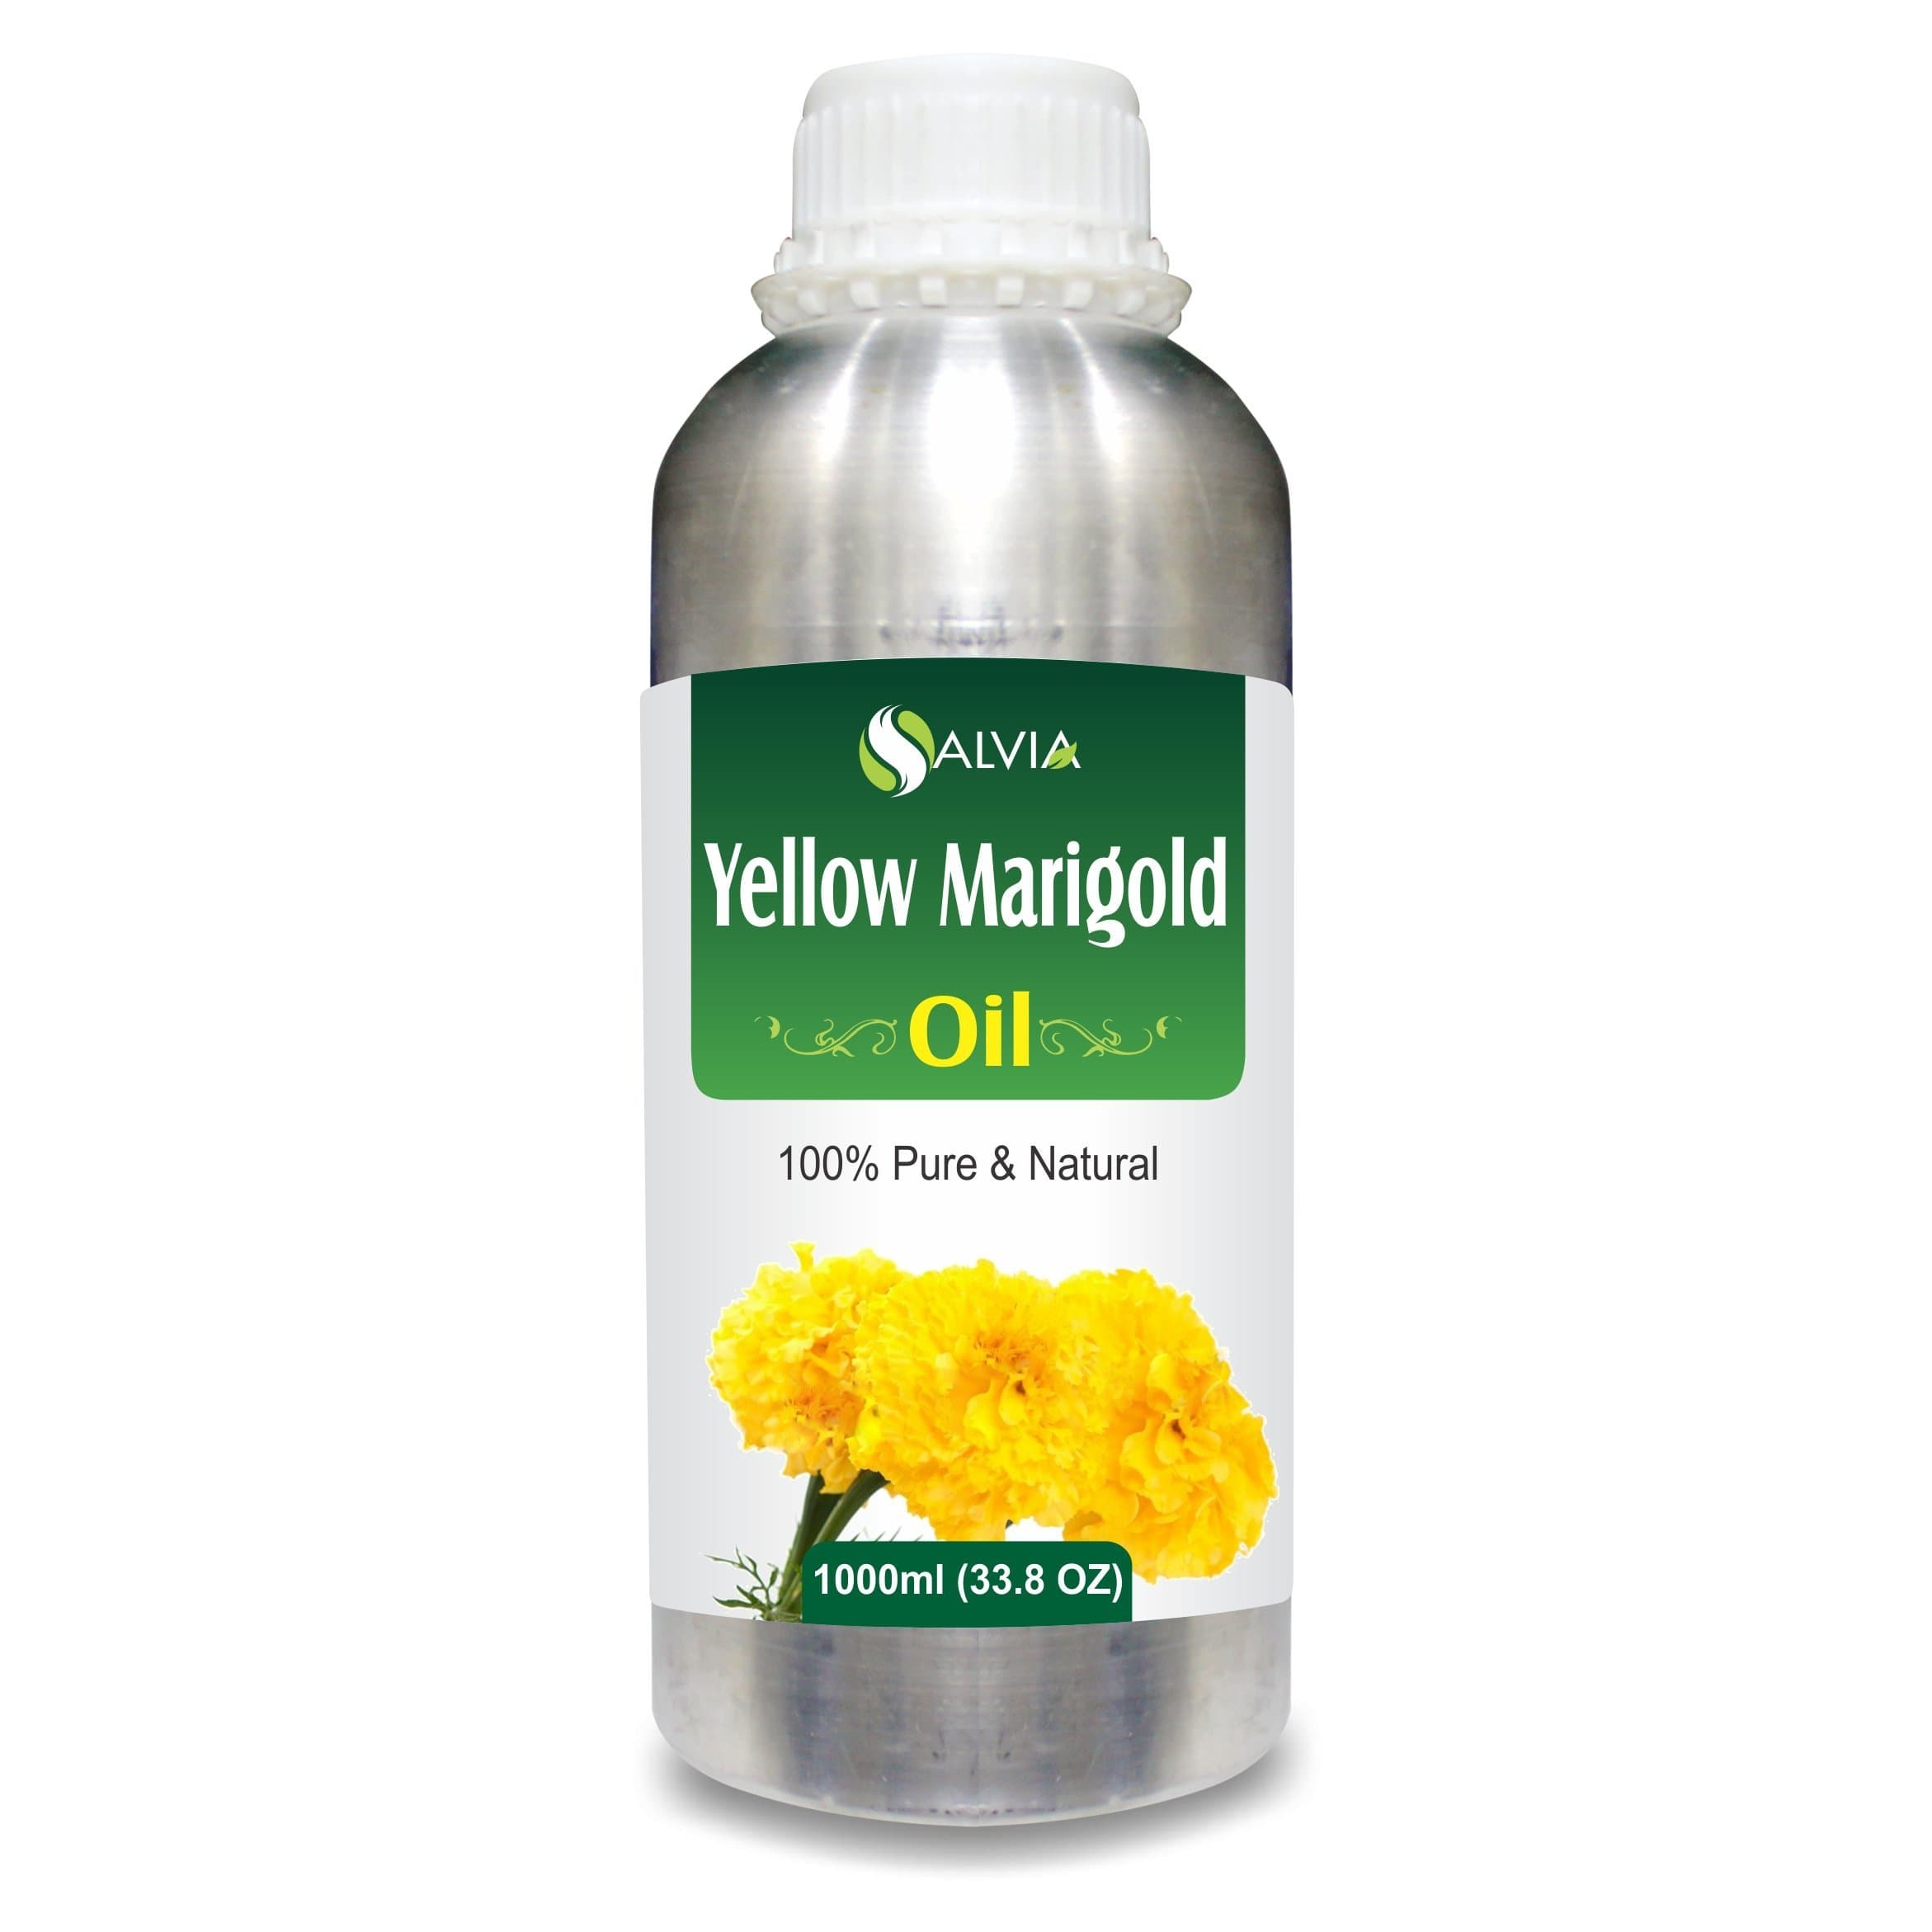 yellow marigold oil